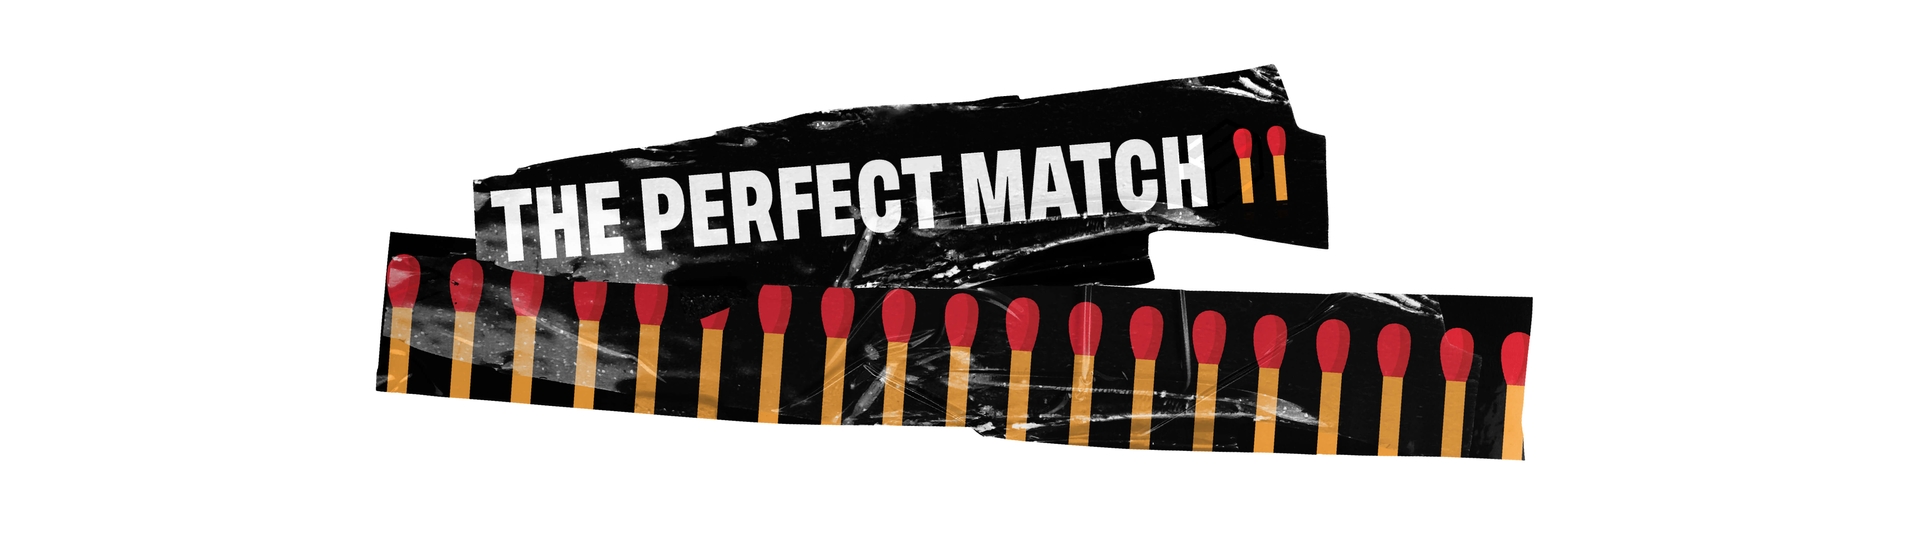 11-Perfect_Match-SimbaUproar.jpg